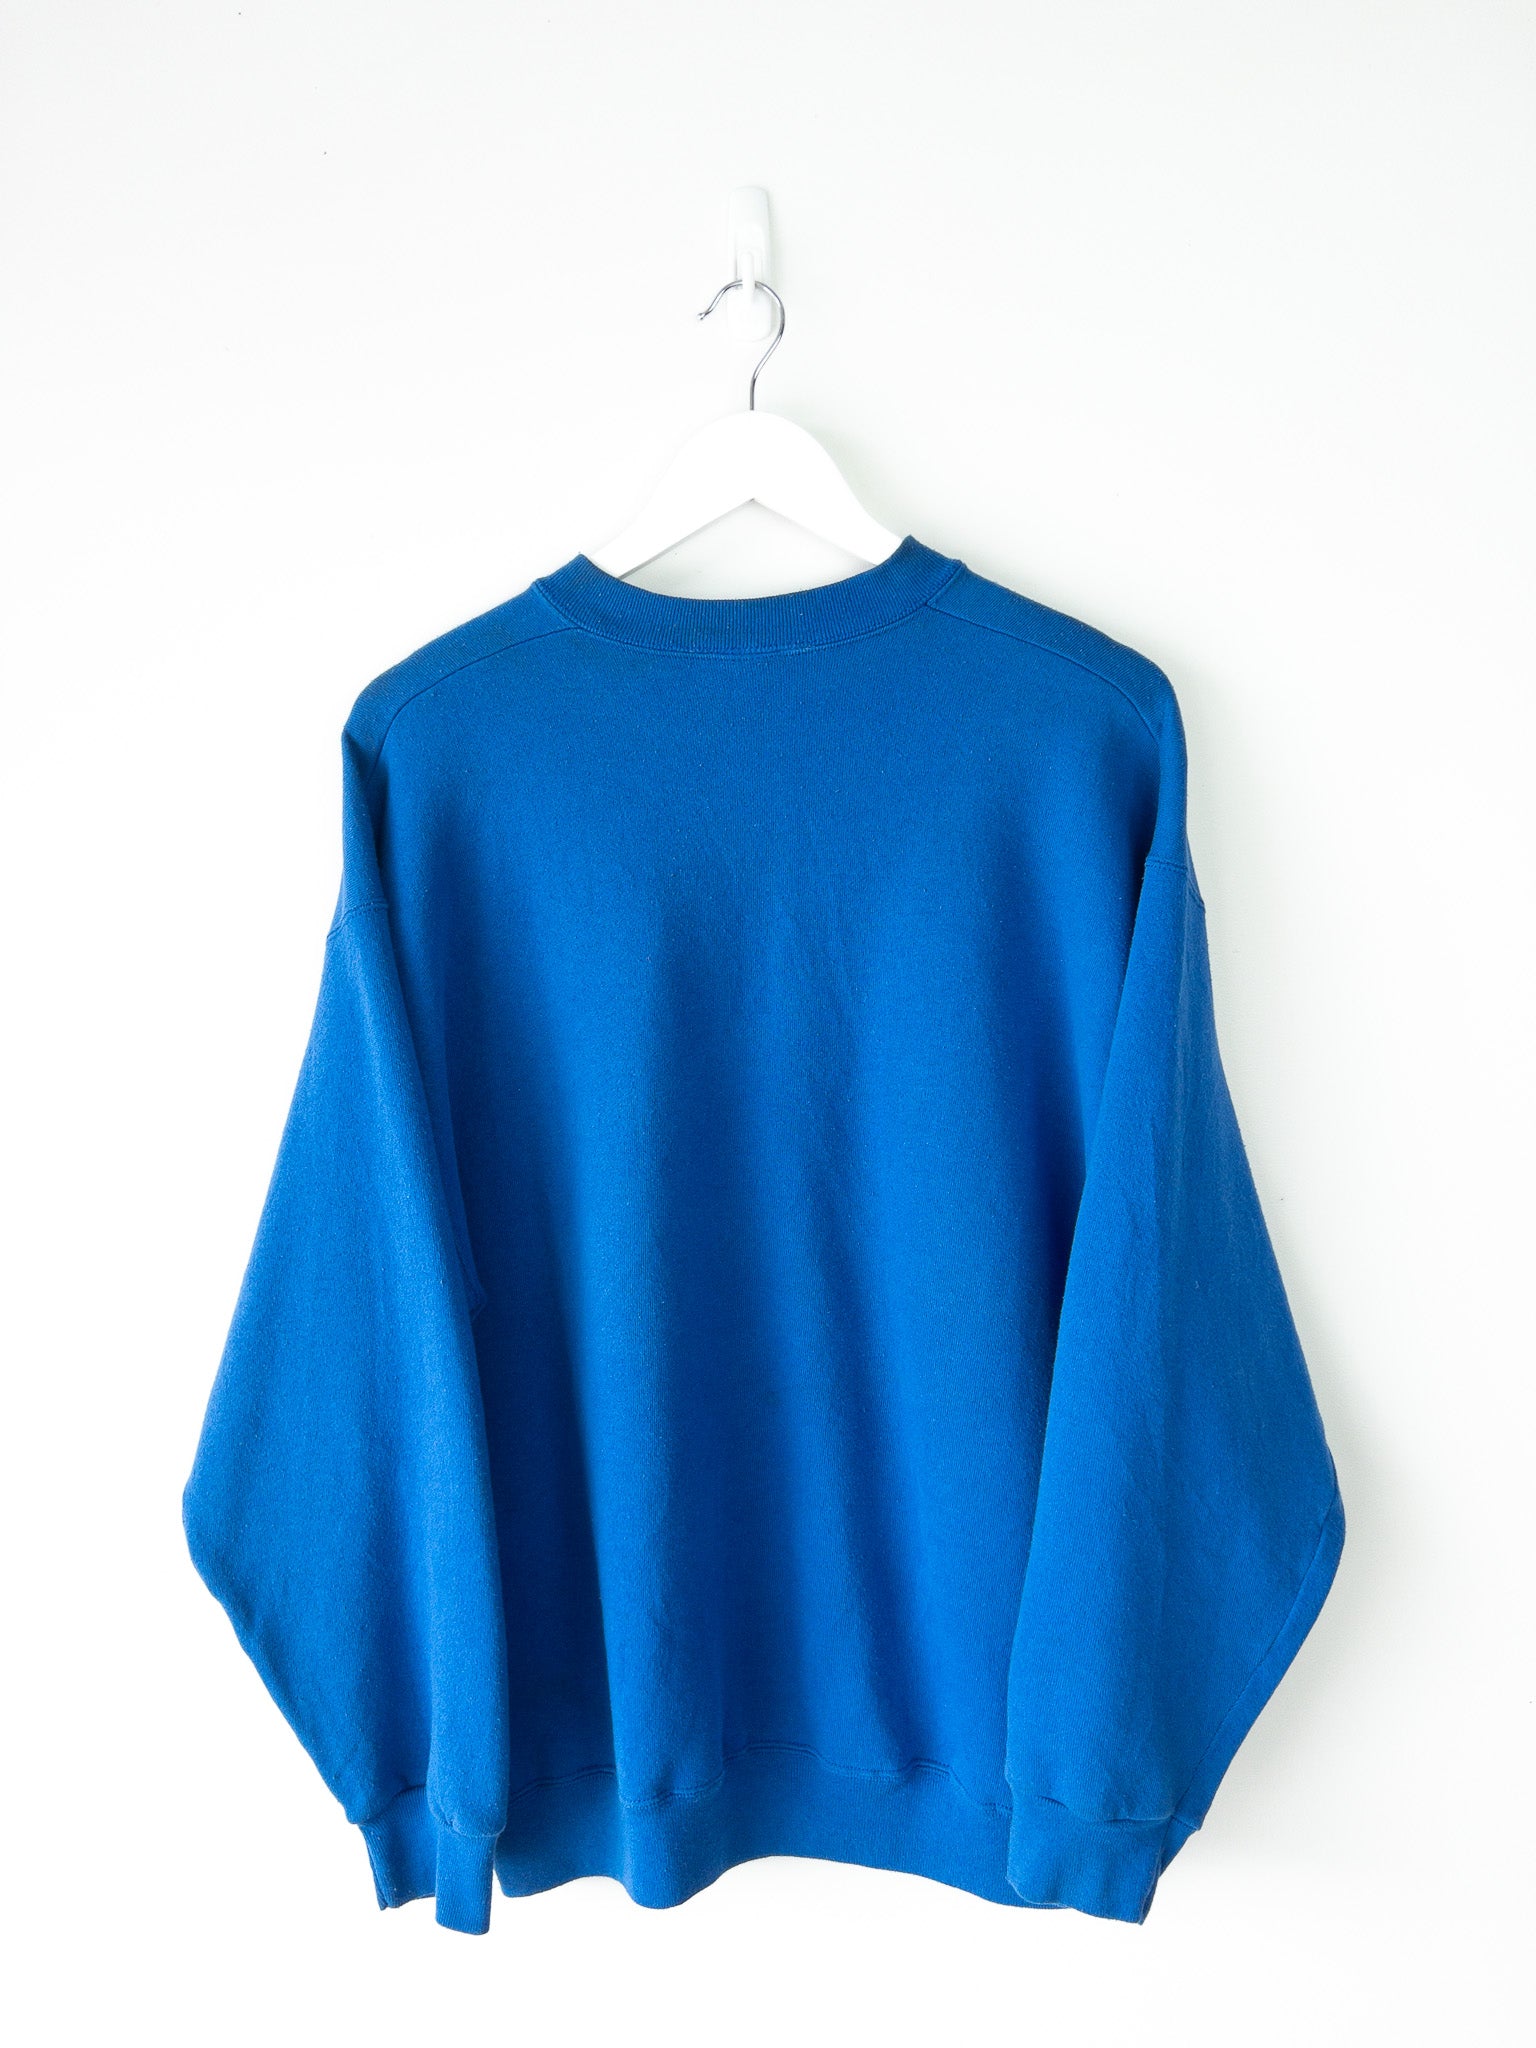 Vintage Duke Blue Devils Sweatshirt (XL)